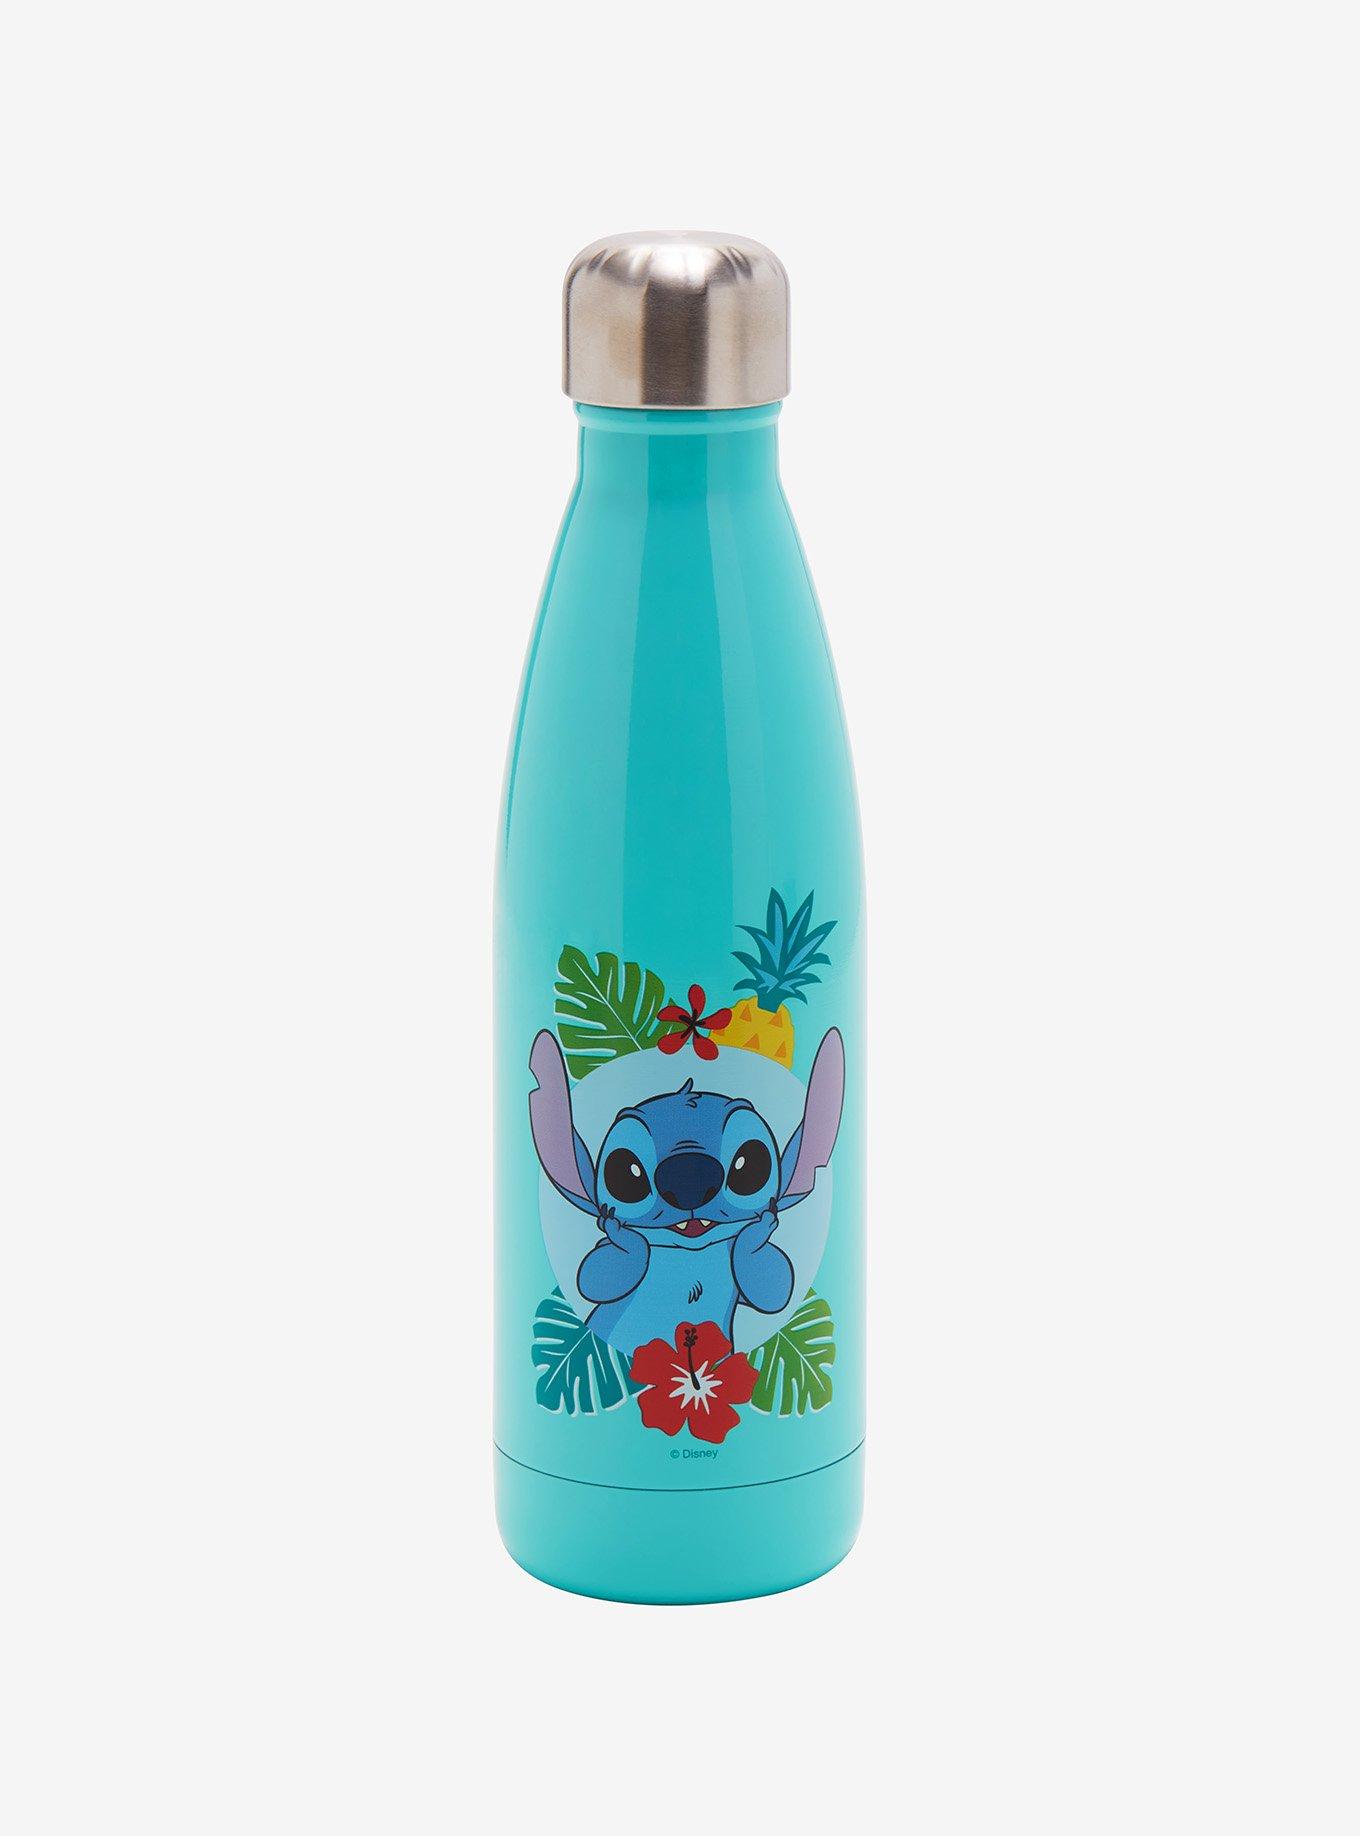 Stitch Stainless Steel Water Bottle – Lilo & Stitch